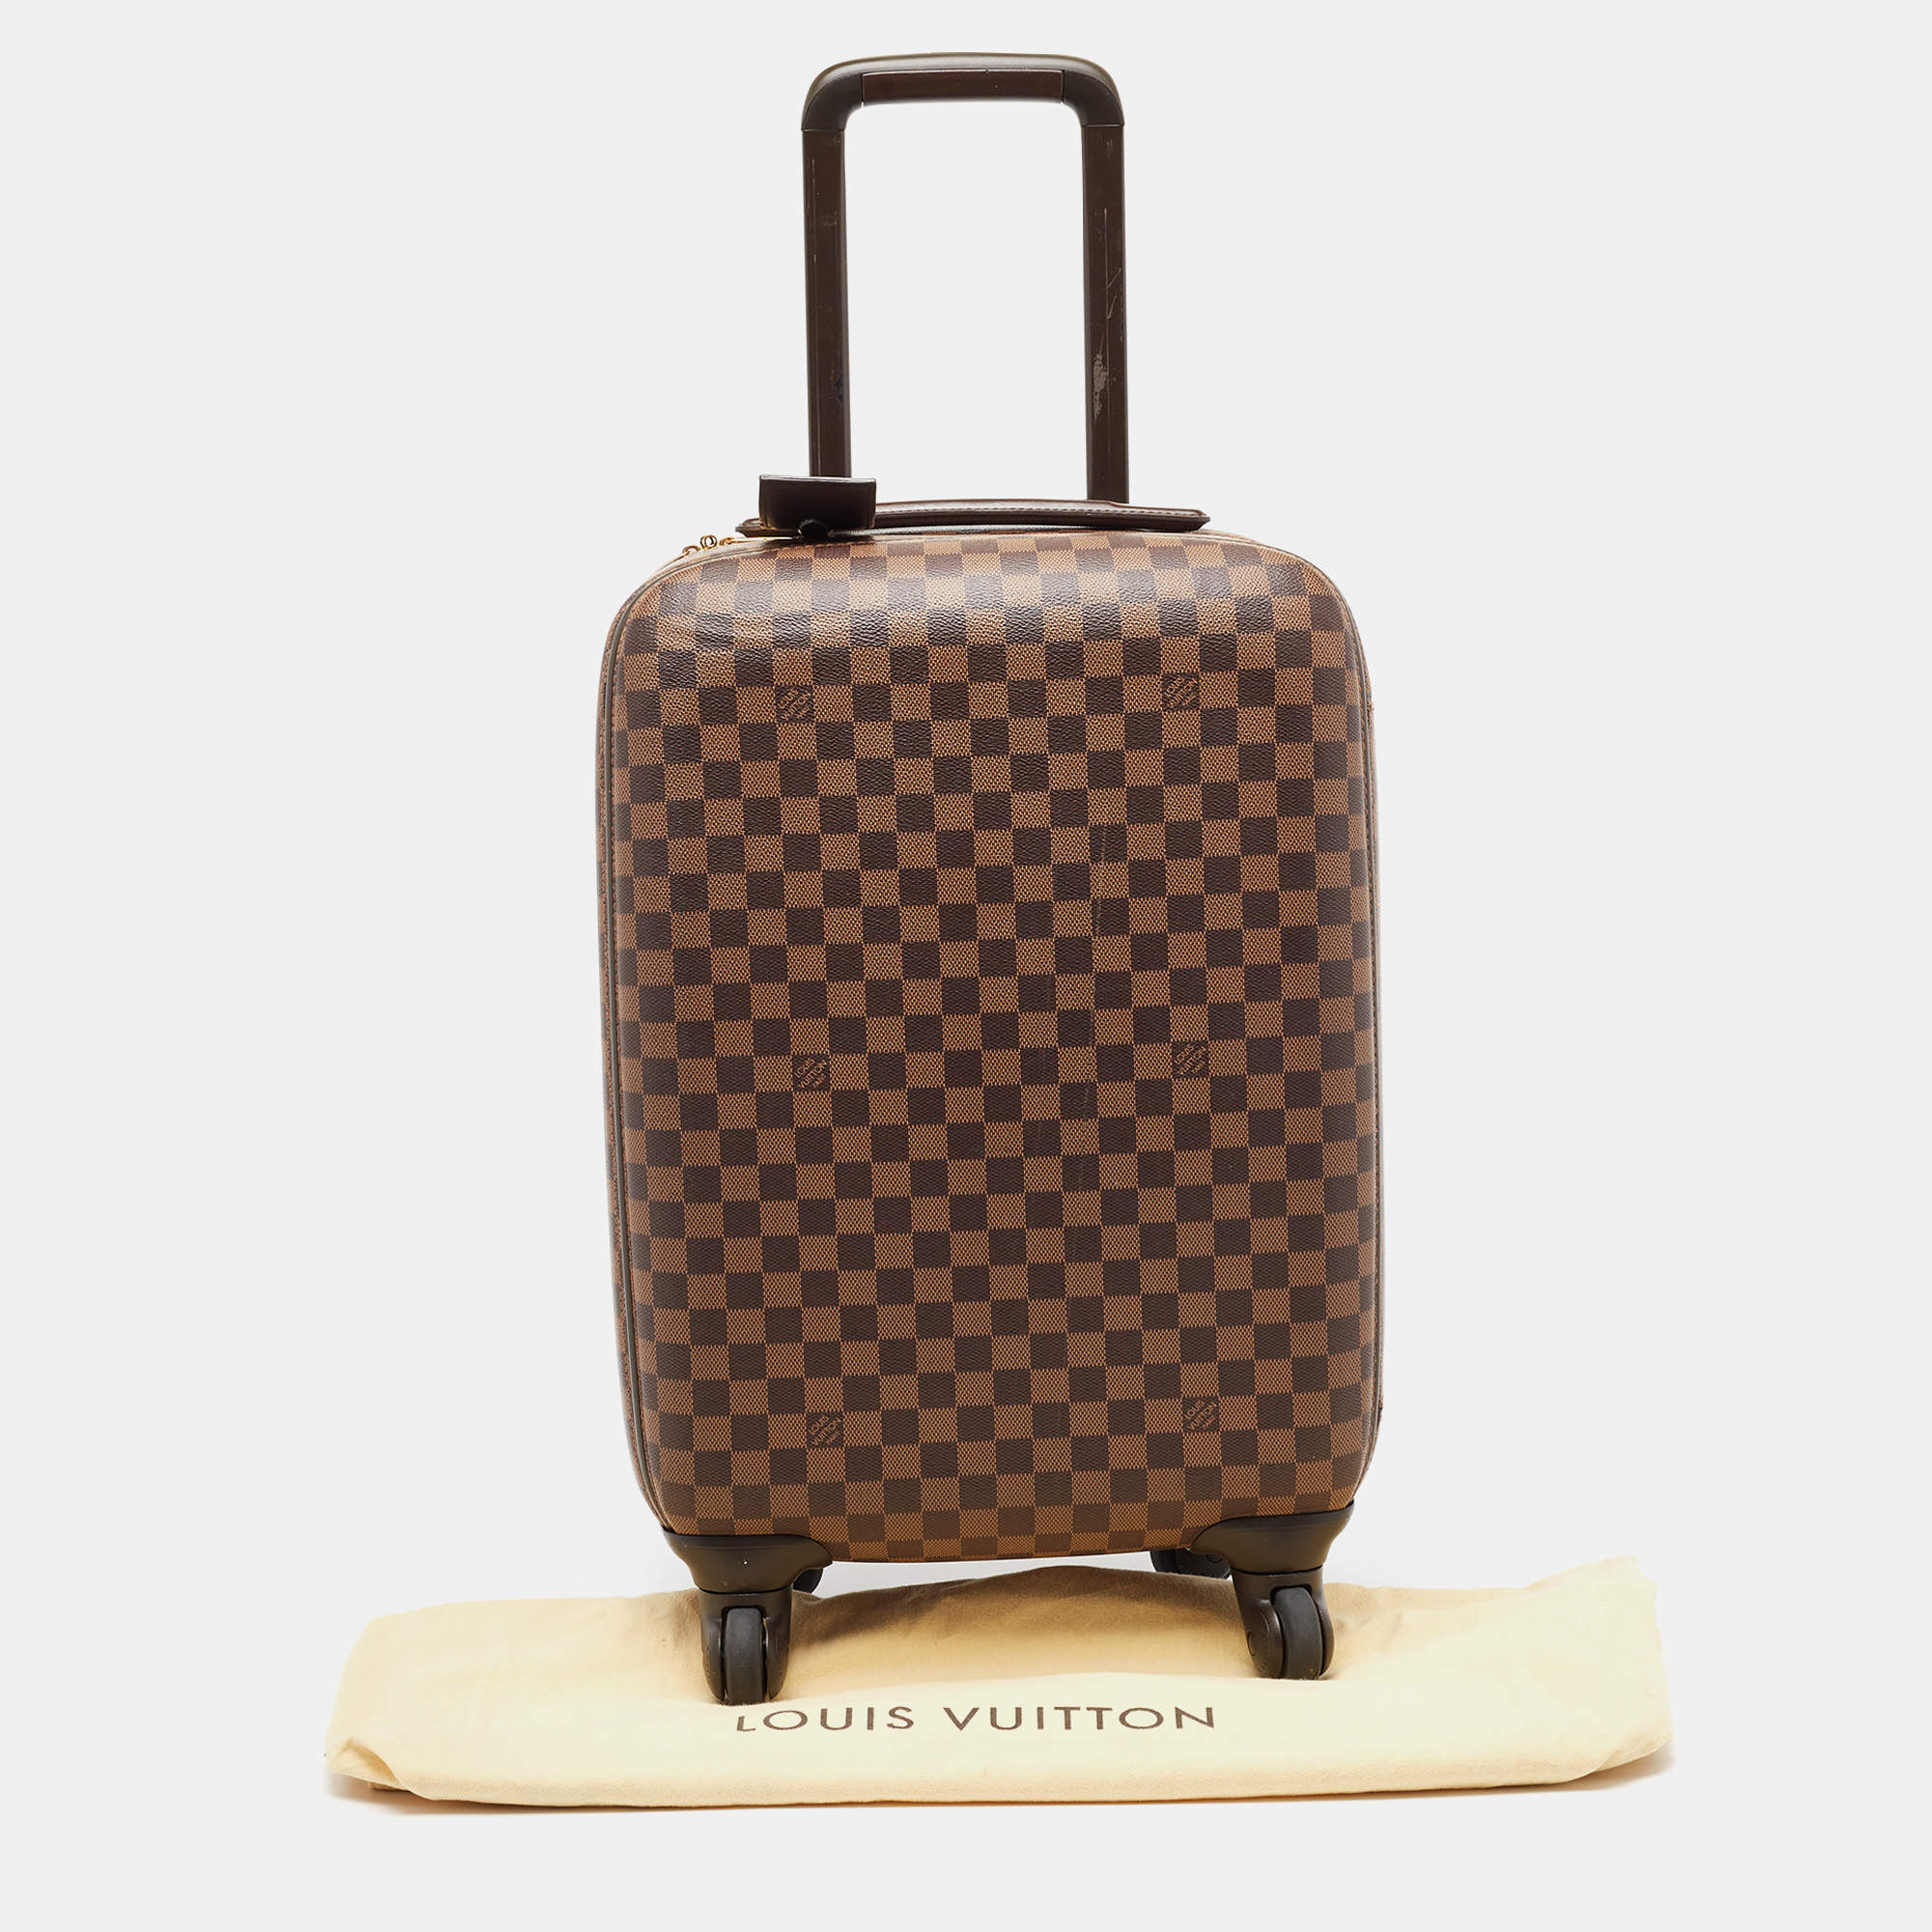 Louis Vuitton, Bags, Authentic Louis Vuitton Carry On Luggage Damier  Ebene Zephyr 55